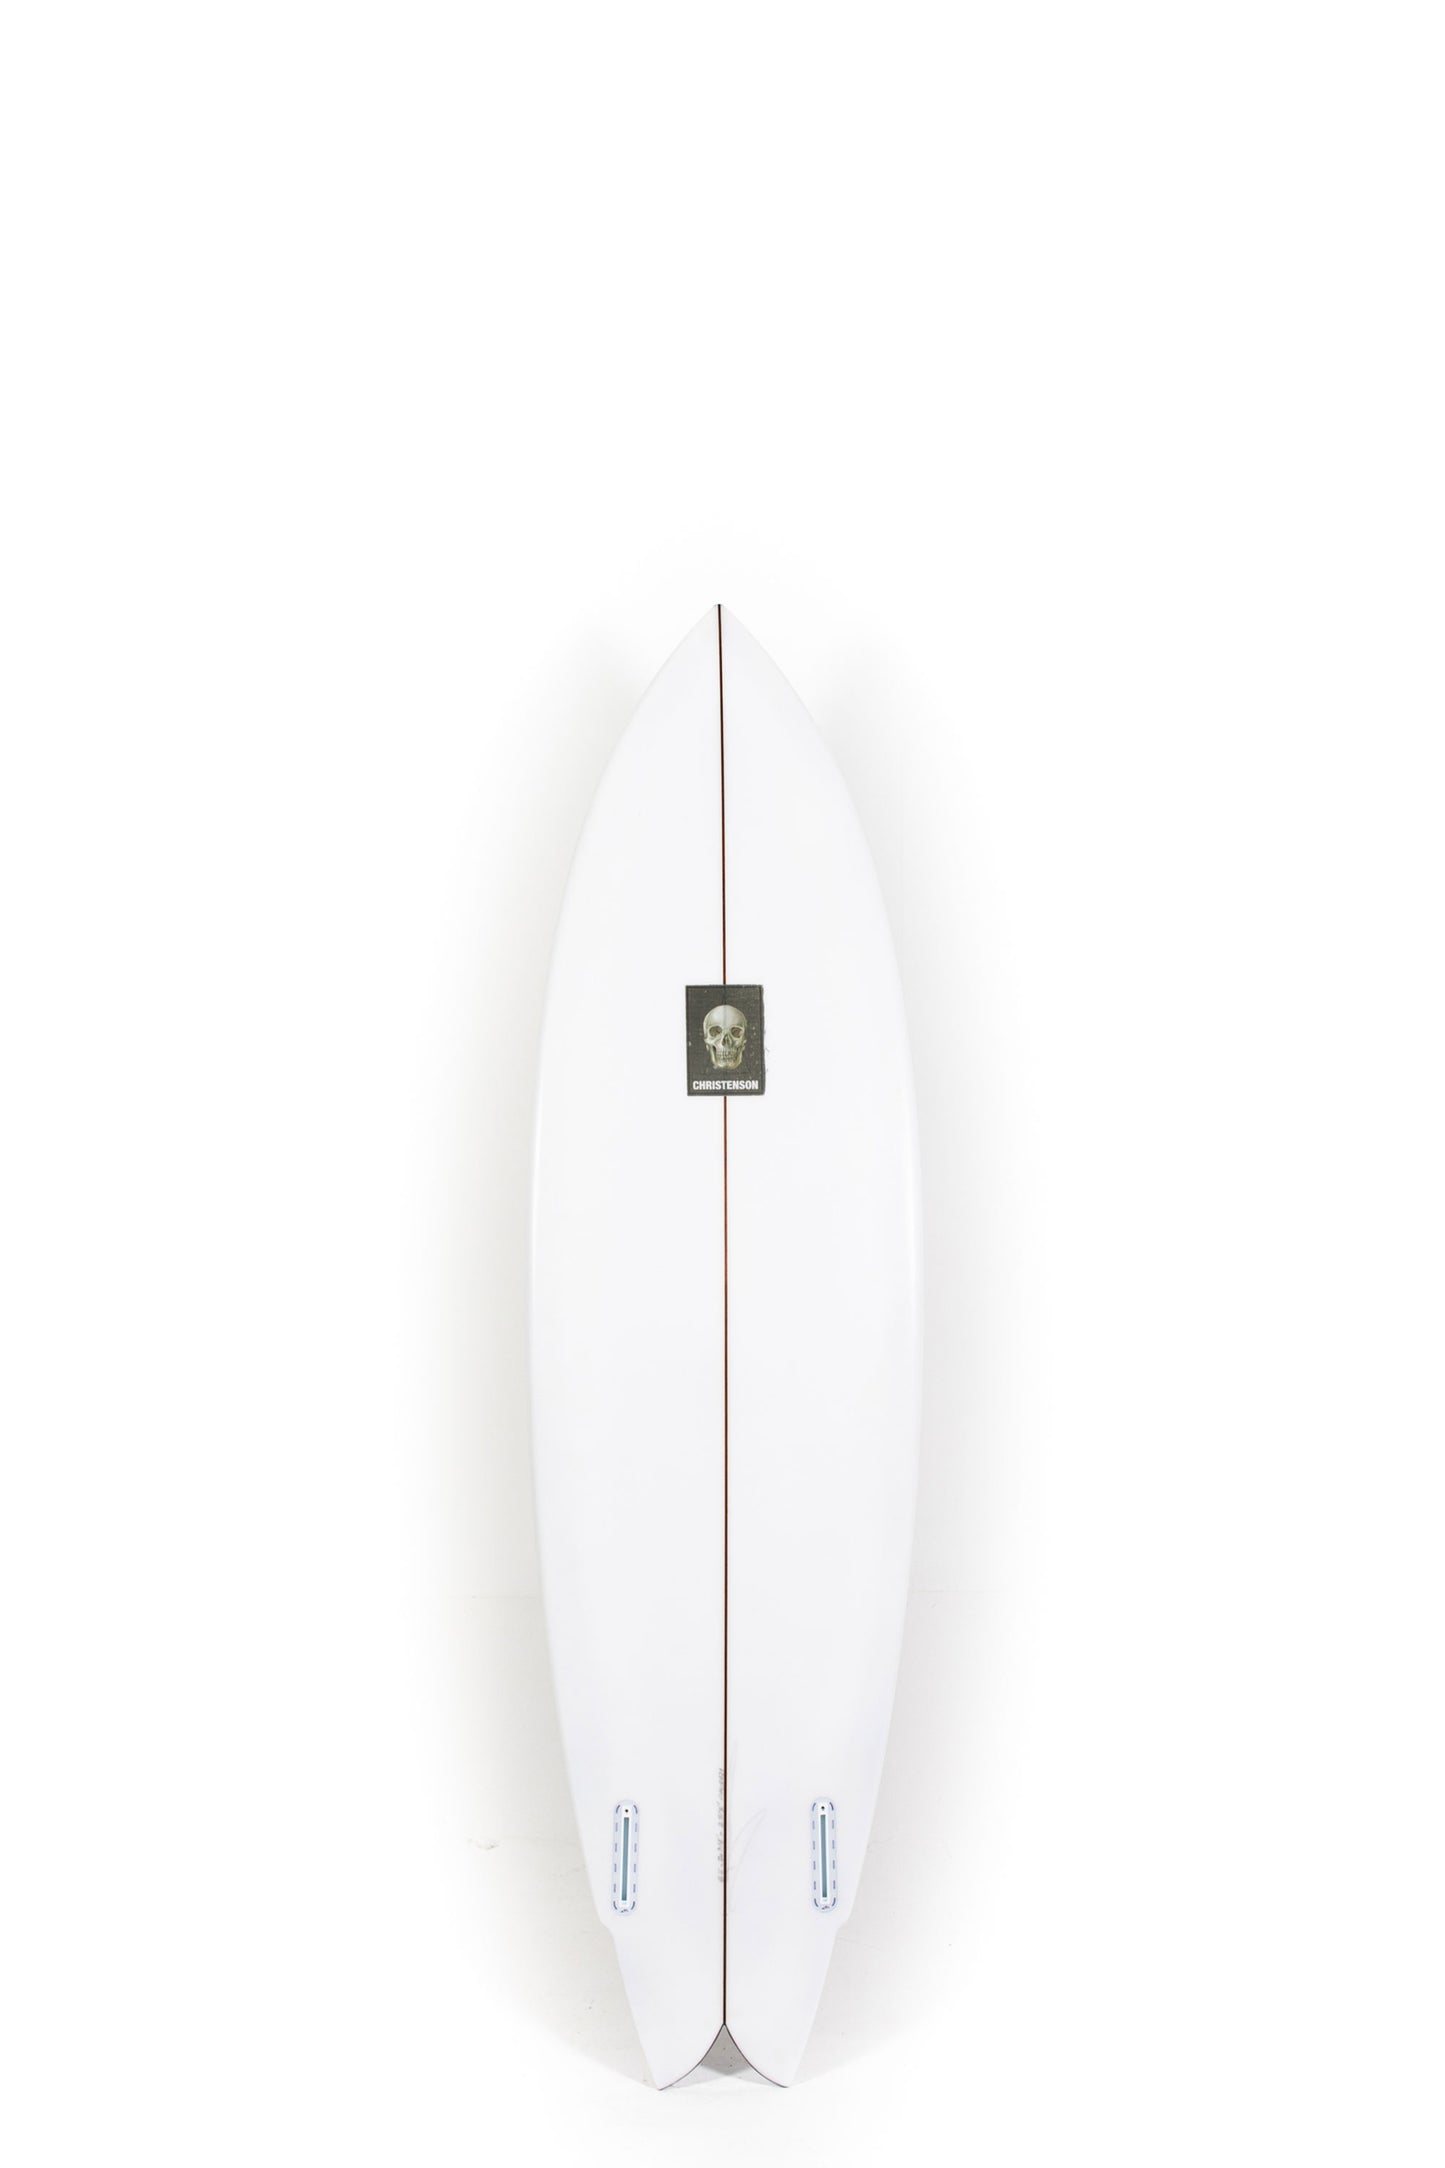 Pukas-Surf-Shop-Christenson-Surfboards-Wolverine-Chris-Christenson